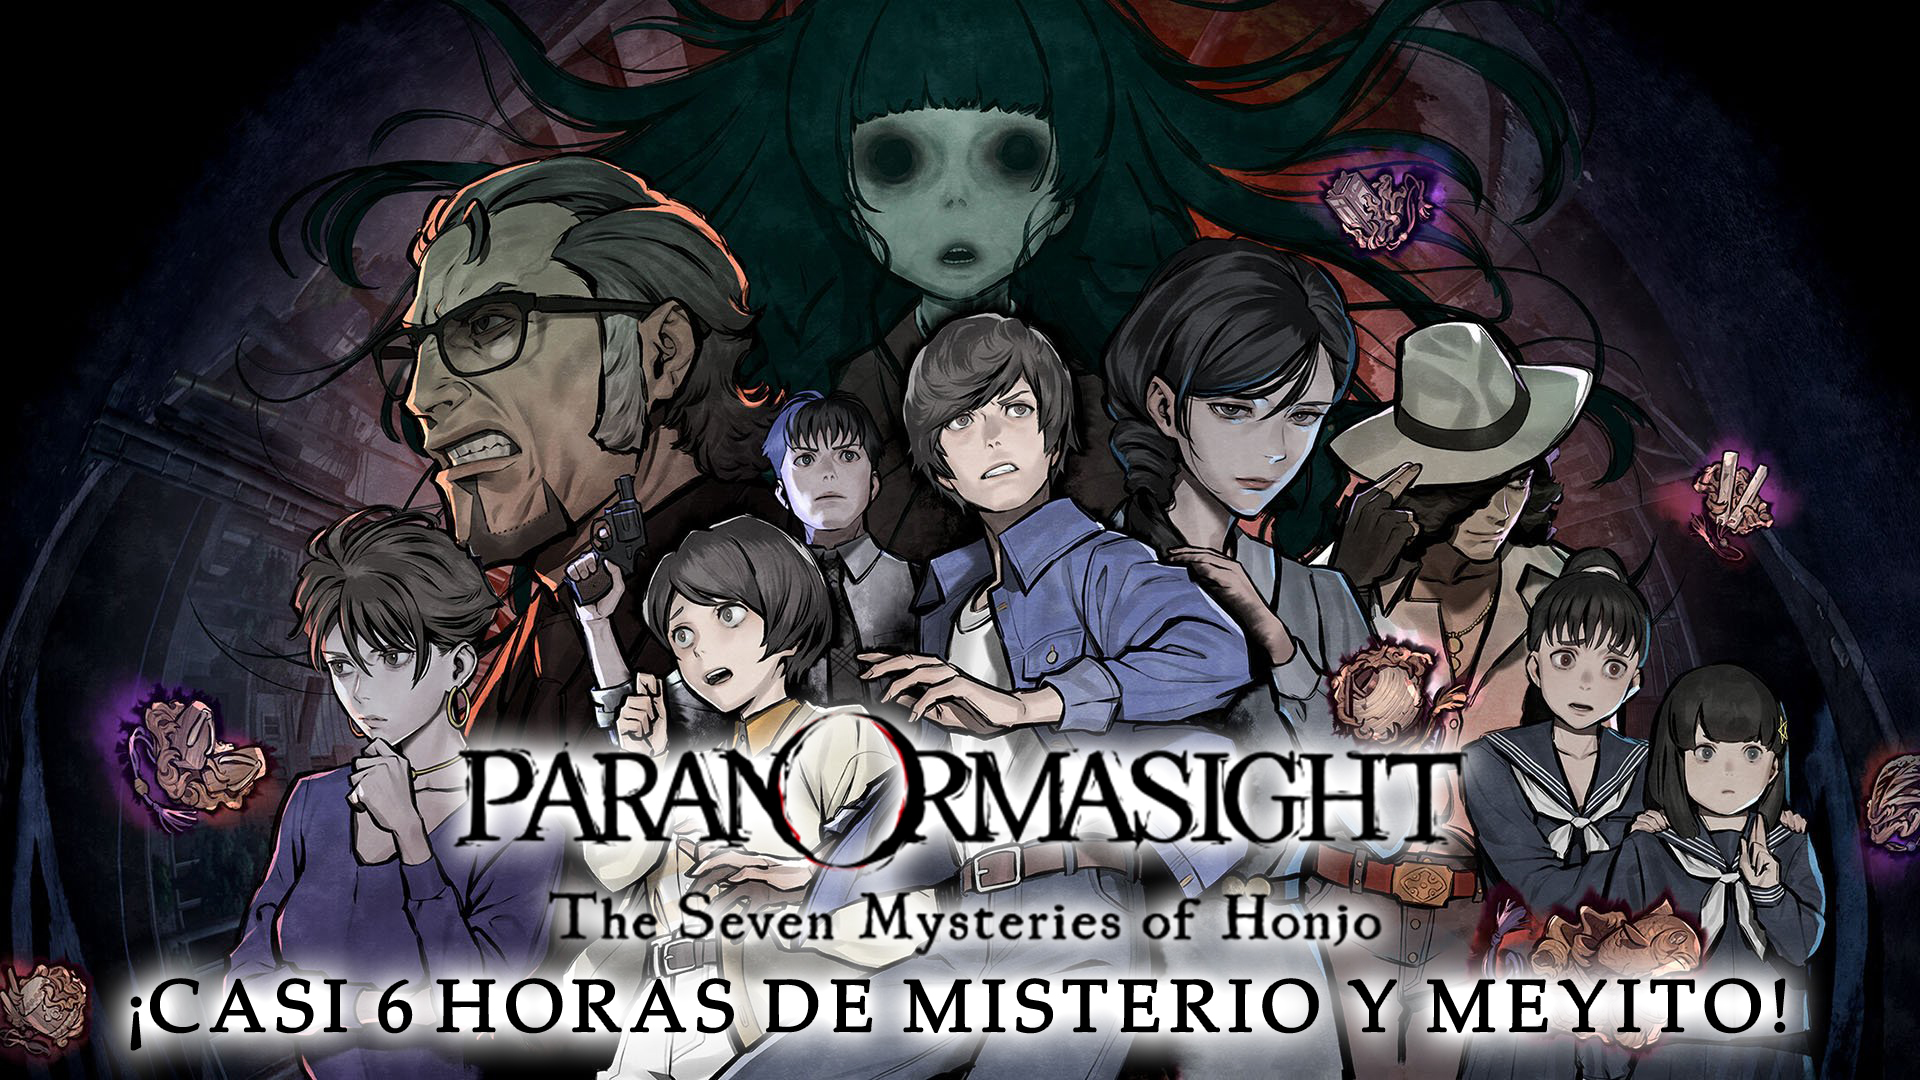 PARANORMASIGHT: The Seven Mysteries of Honjo – ¡Casi 6 horas de misterio y meyito!